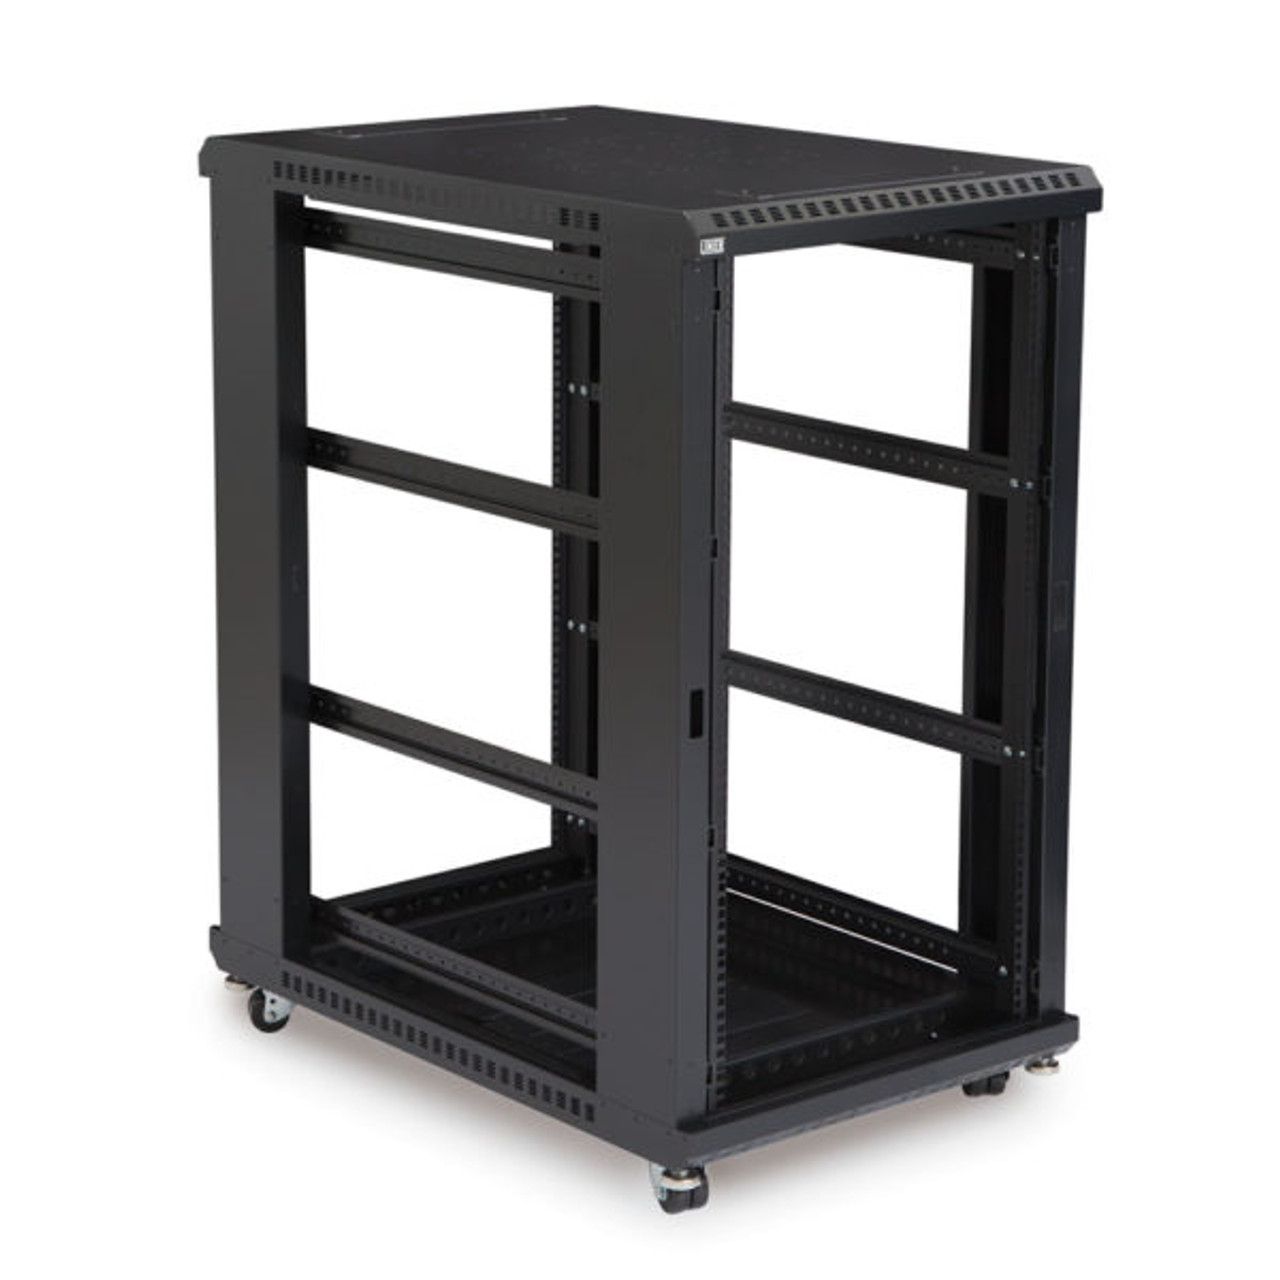 22U LINIER® Server Cabinet - No Doors/No Side Panels - 36" Depth